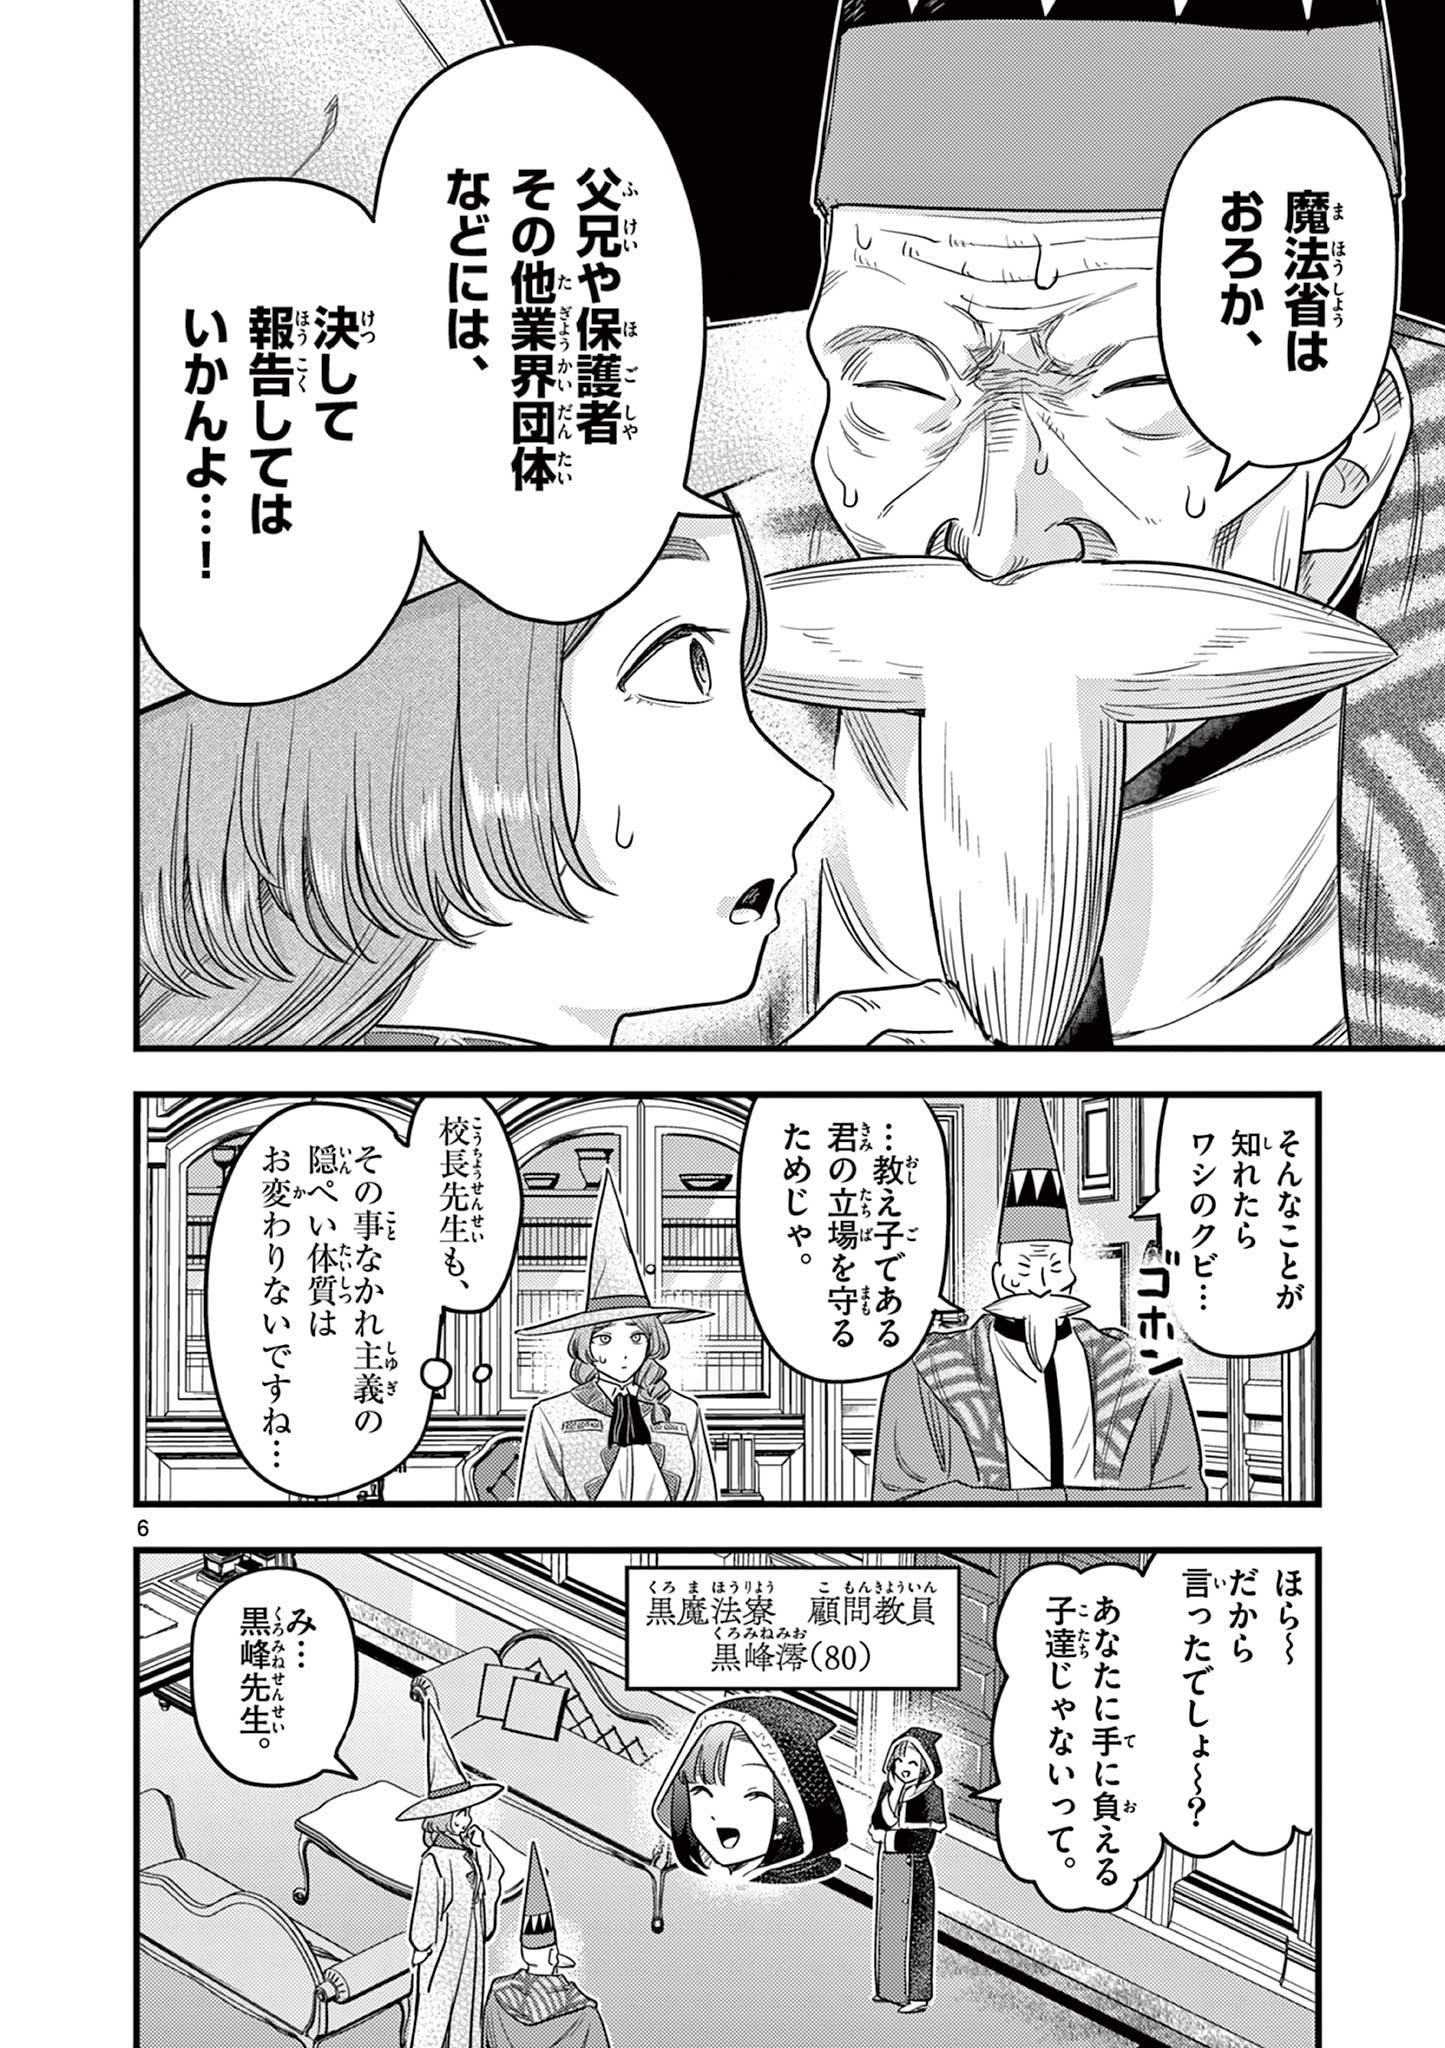 Kuro Mahou Ryou no Sanakunin - Chapter 9 - Page 6